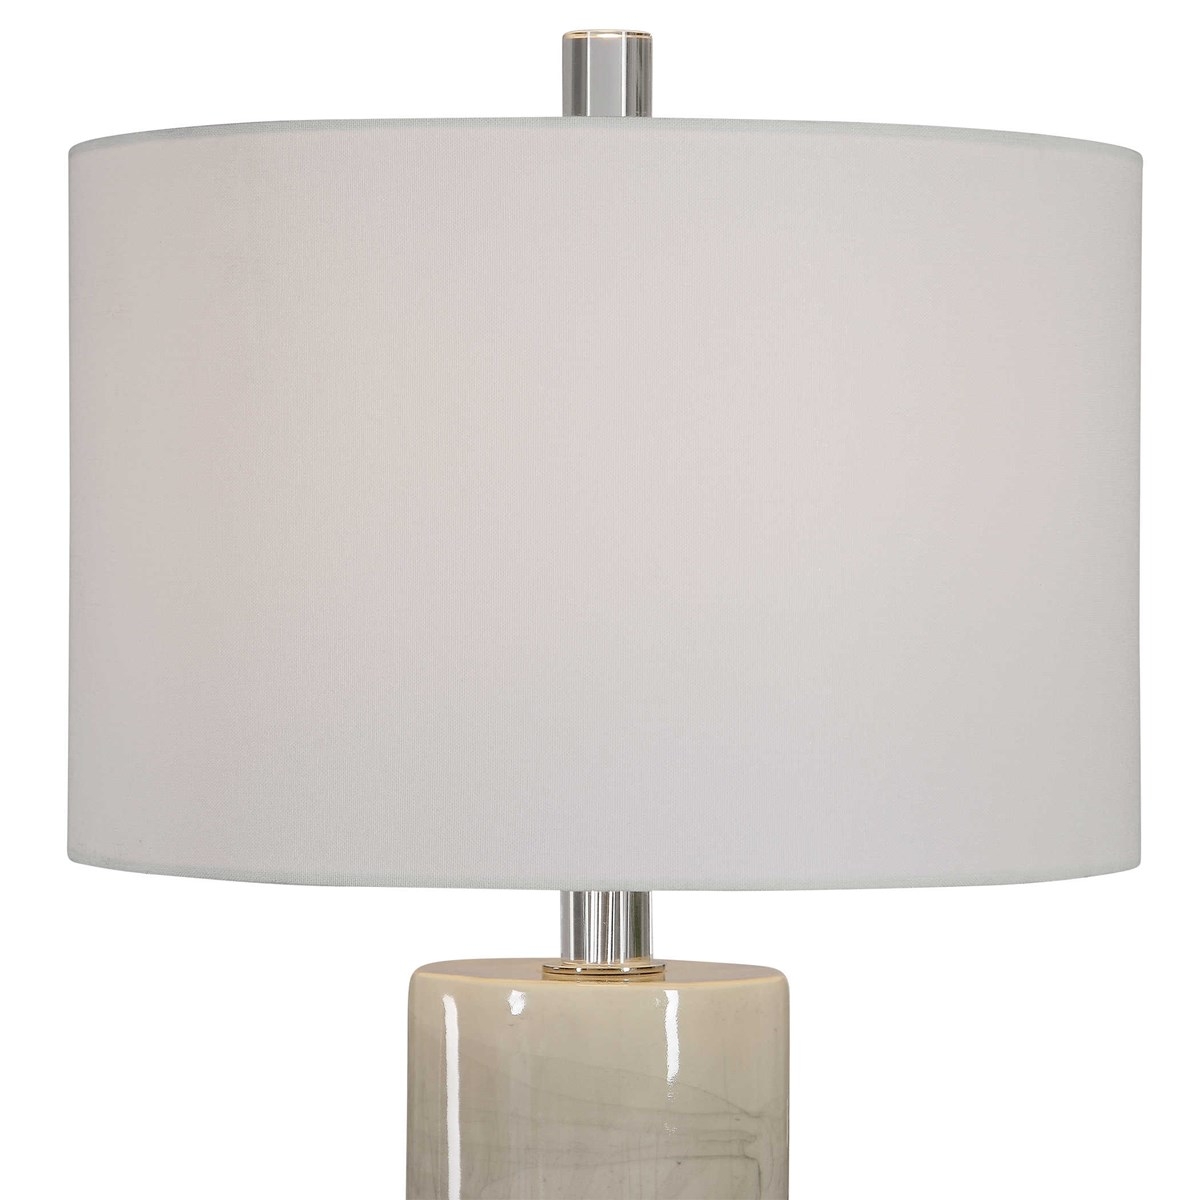 ZESIRO TABLE LAMP - Image 5